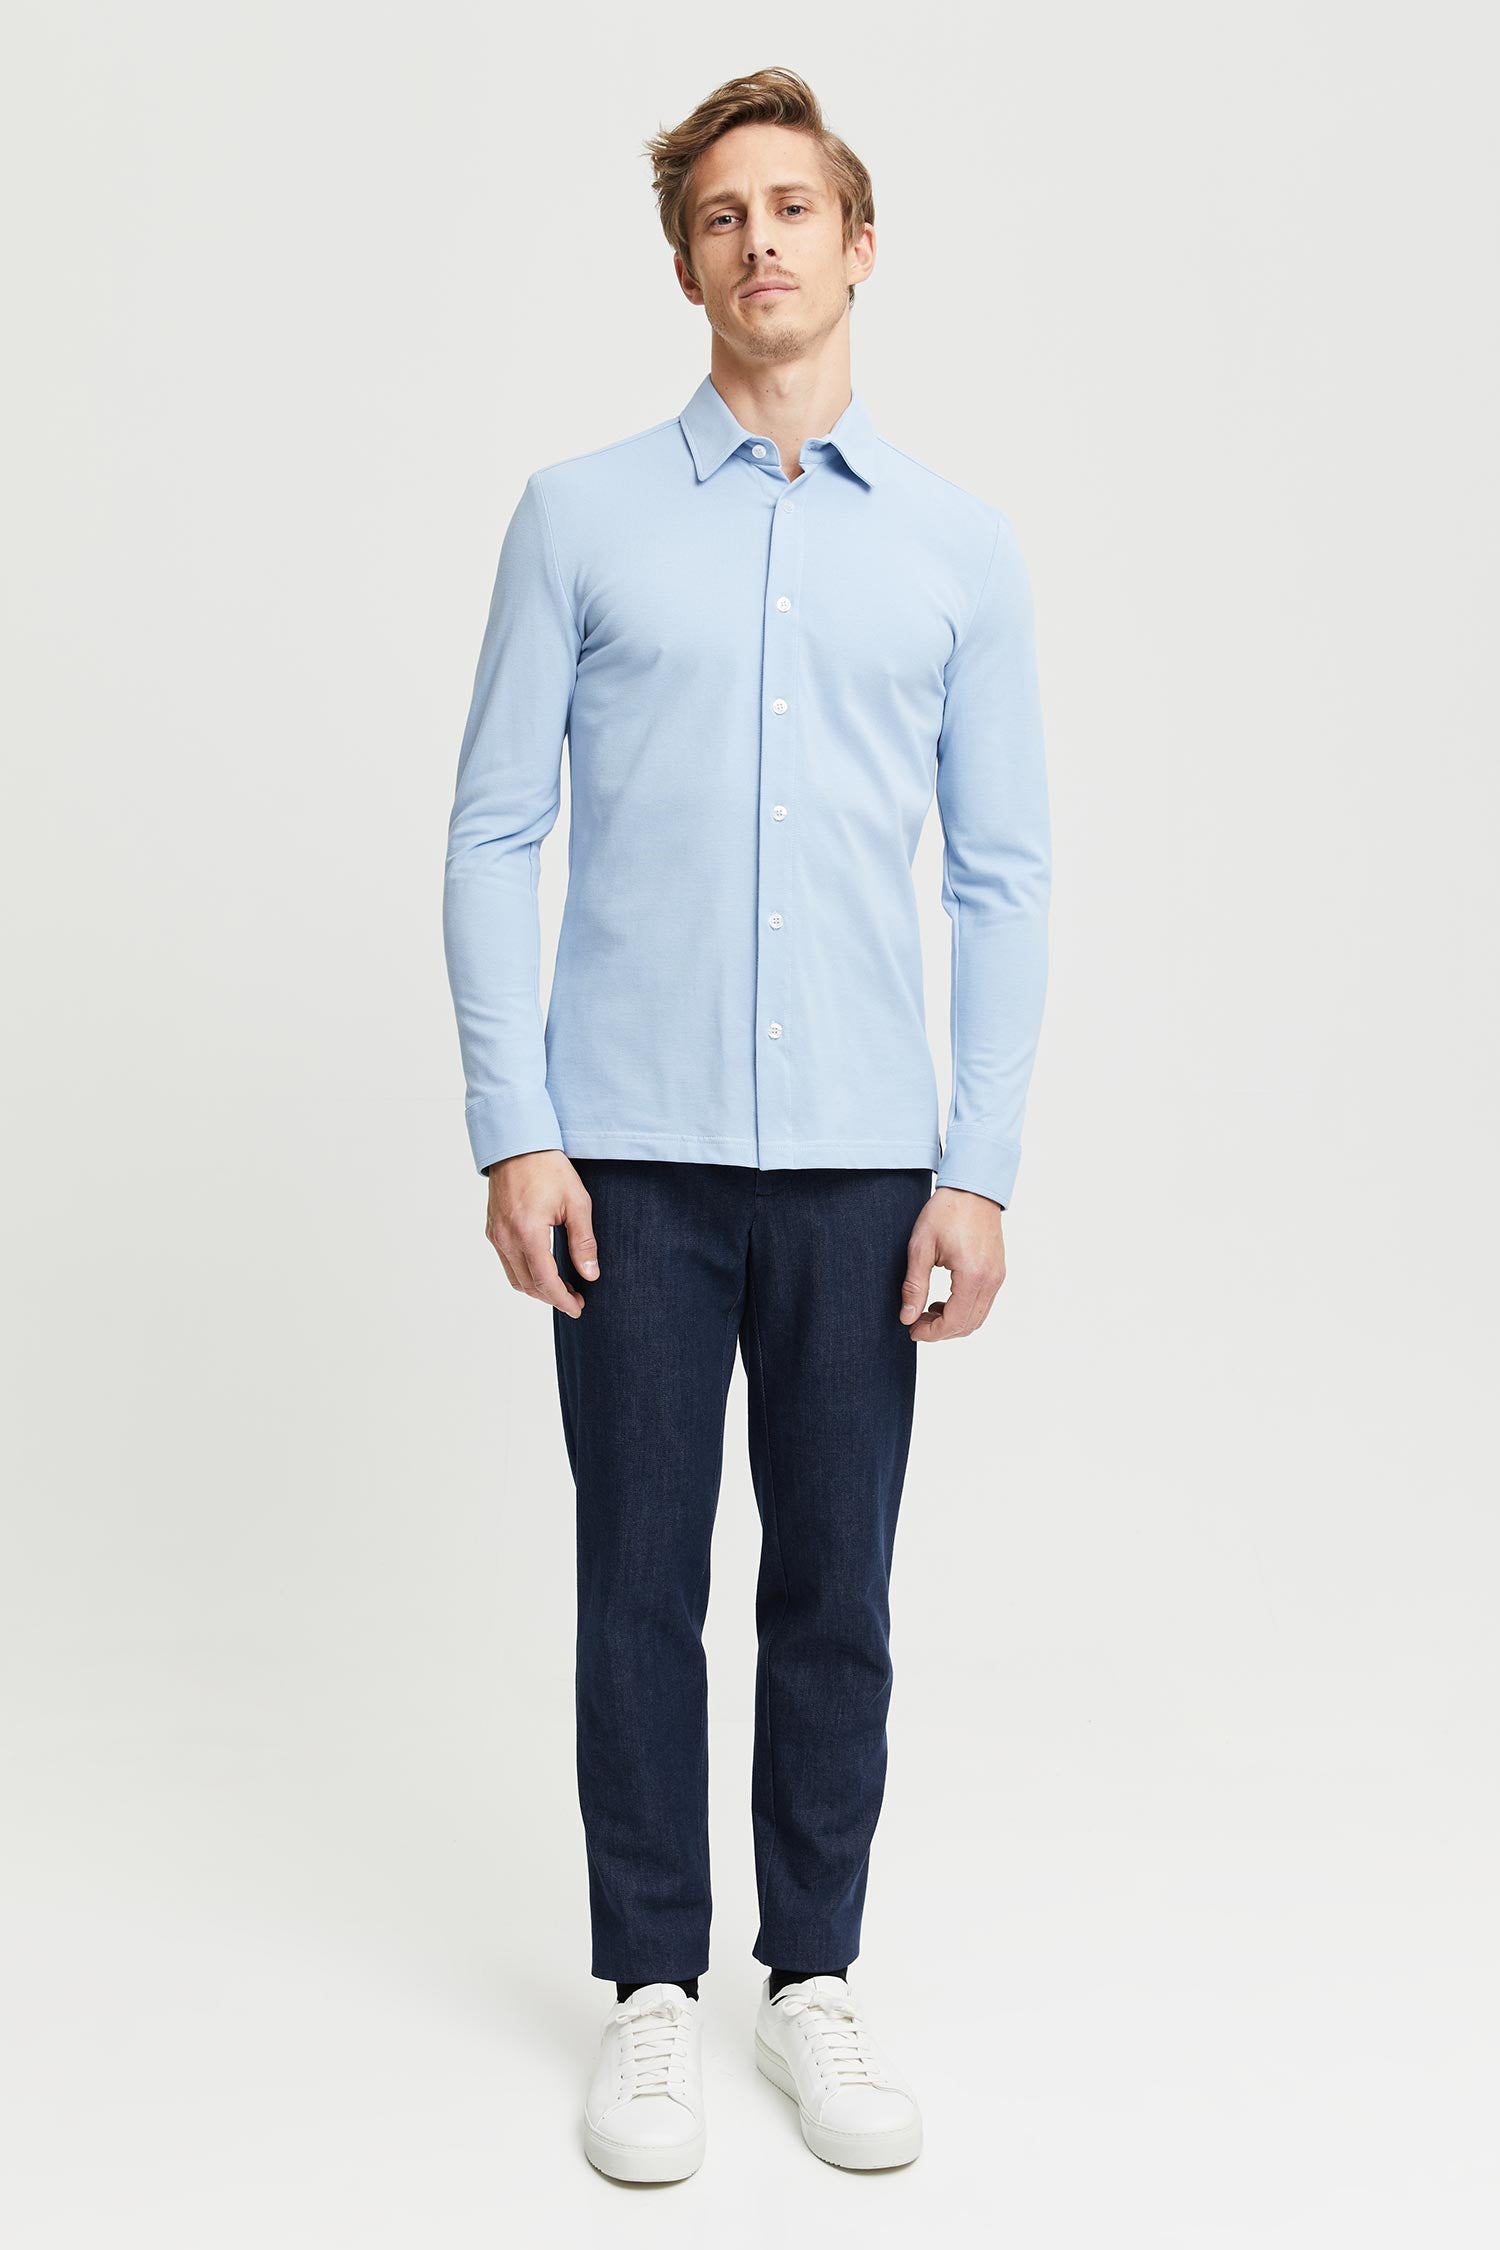 Frenn Hemmo sustainable premium quality GOTS organic cotton pique jersey shirt blue